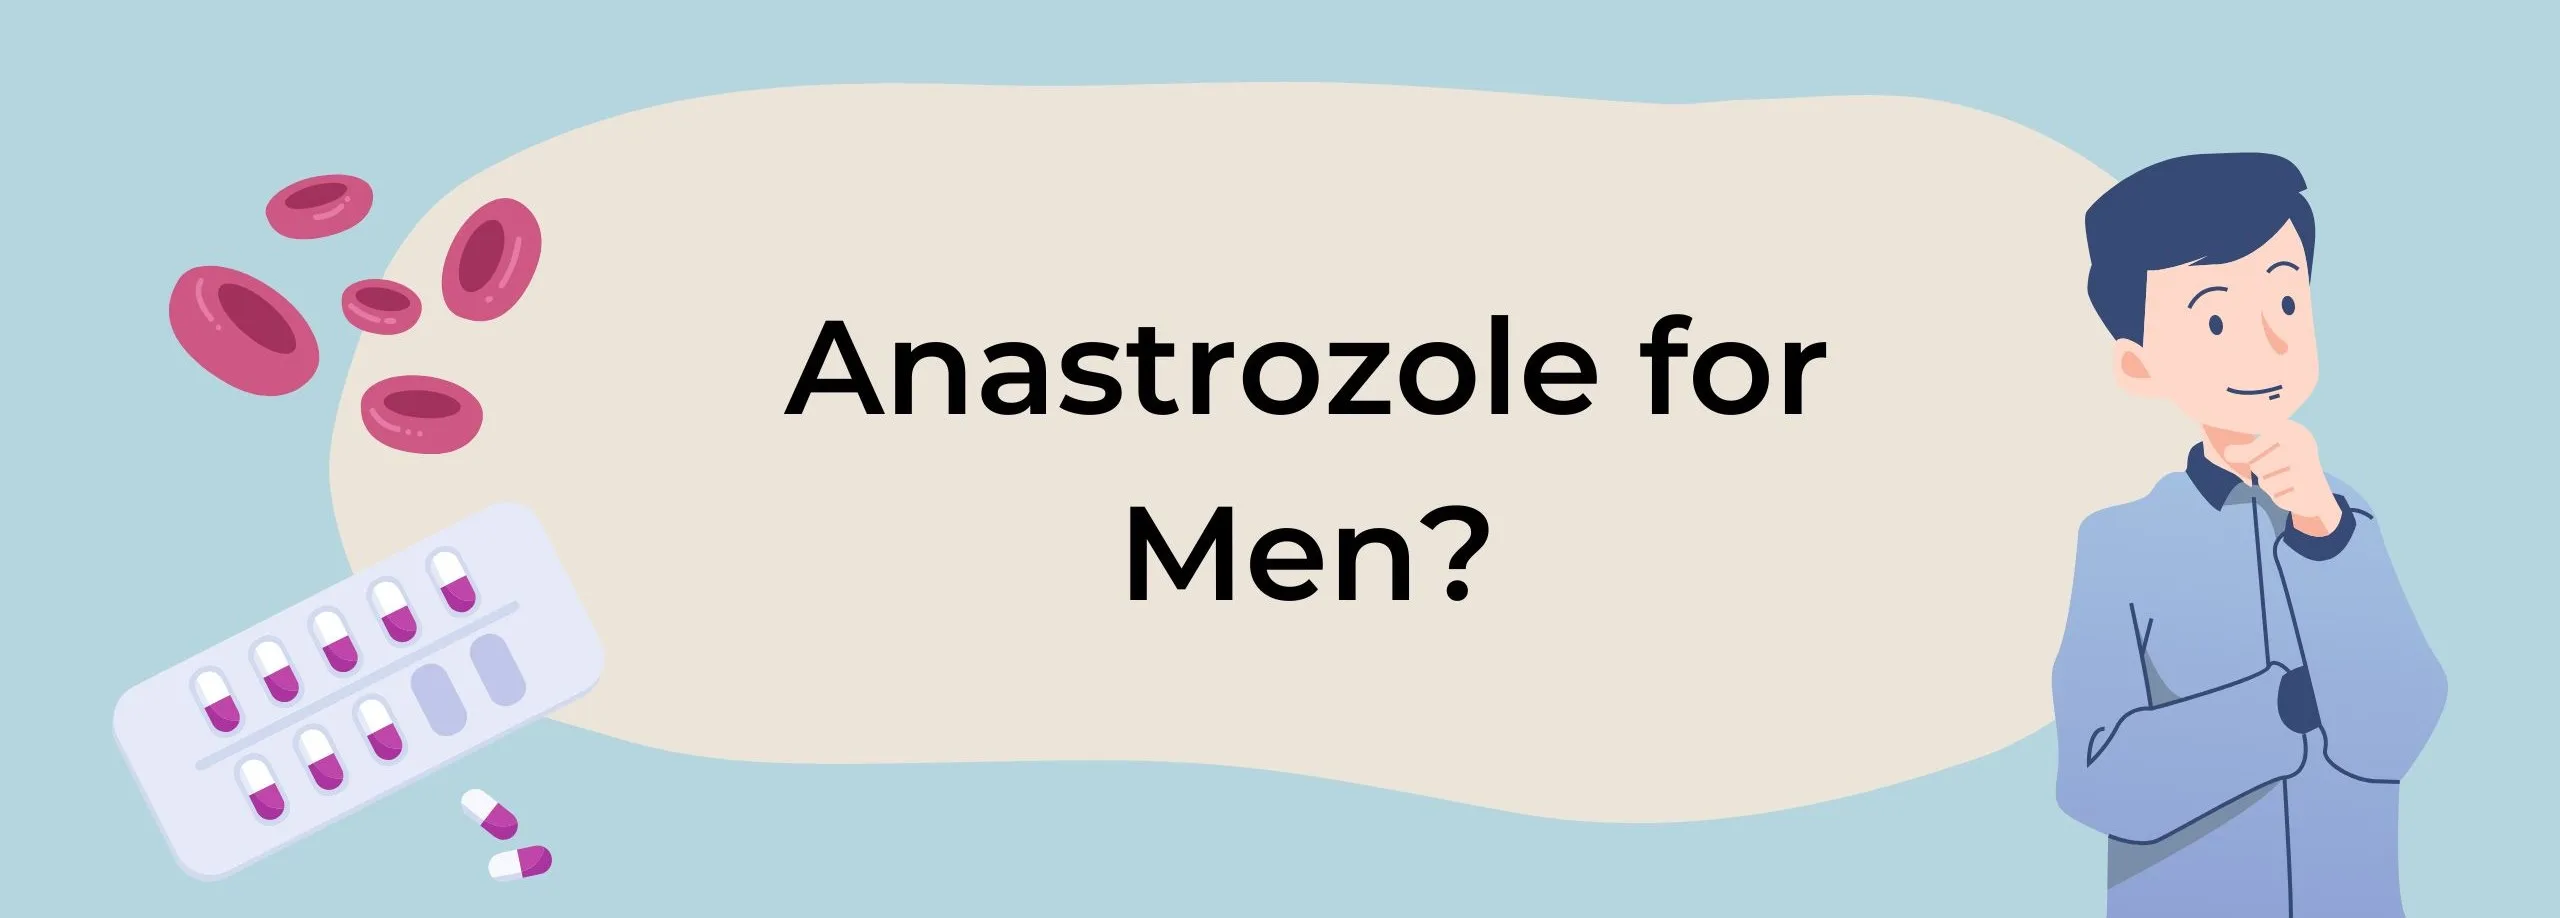 anastrozole for men